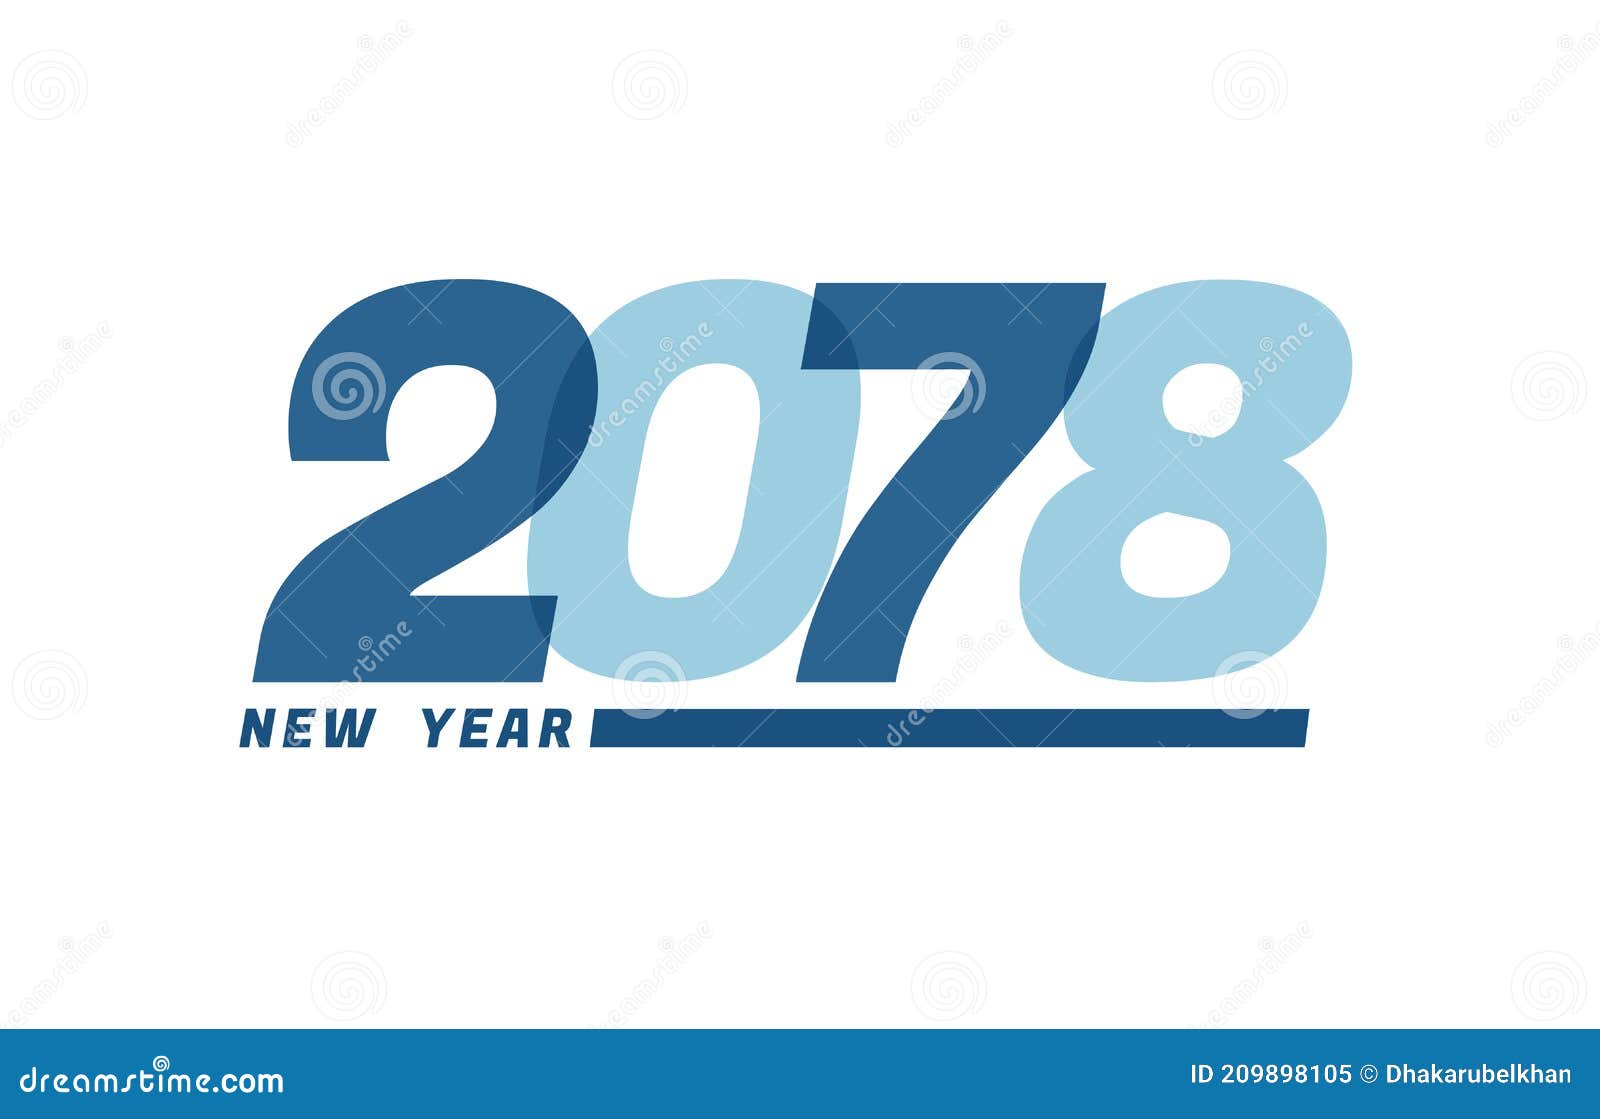 Happy new year 2078